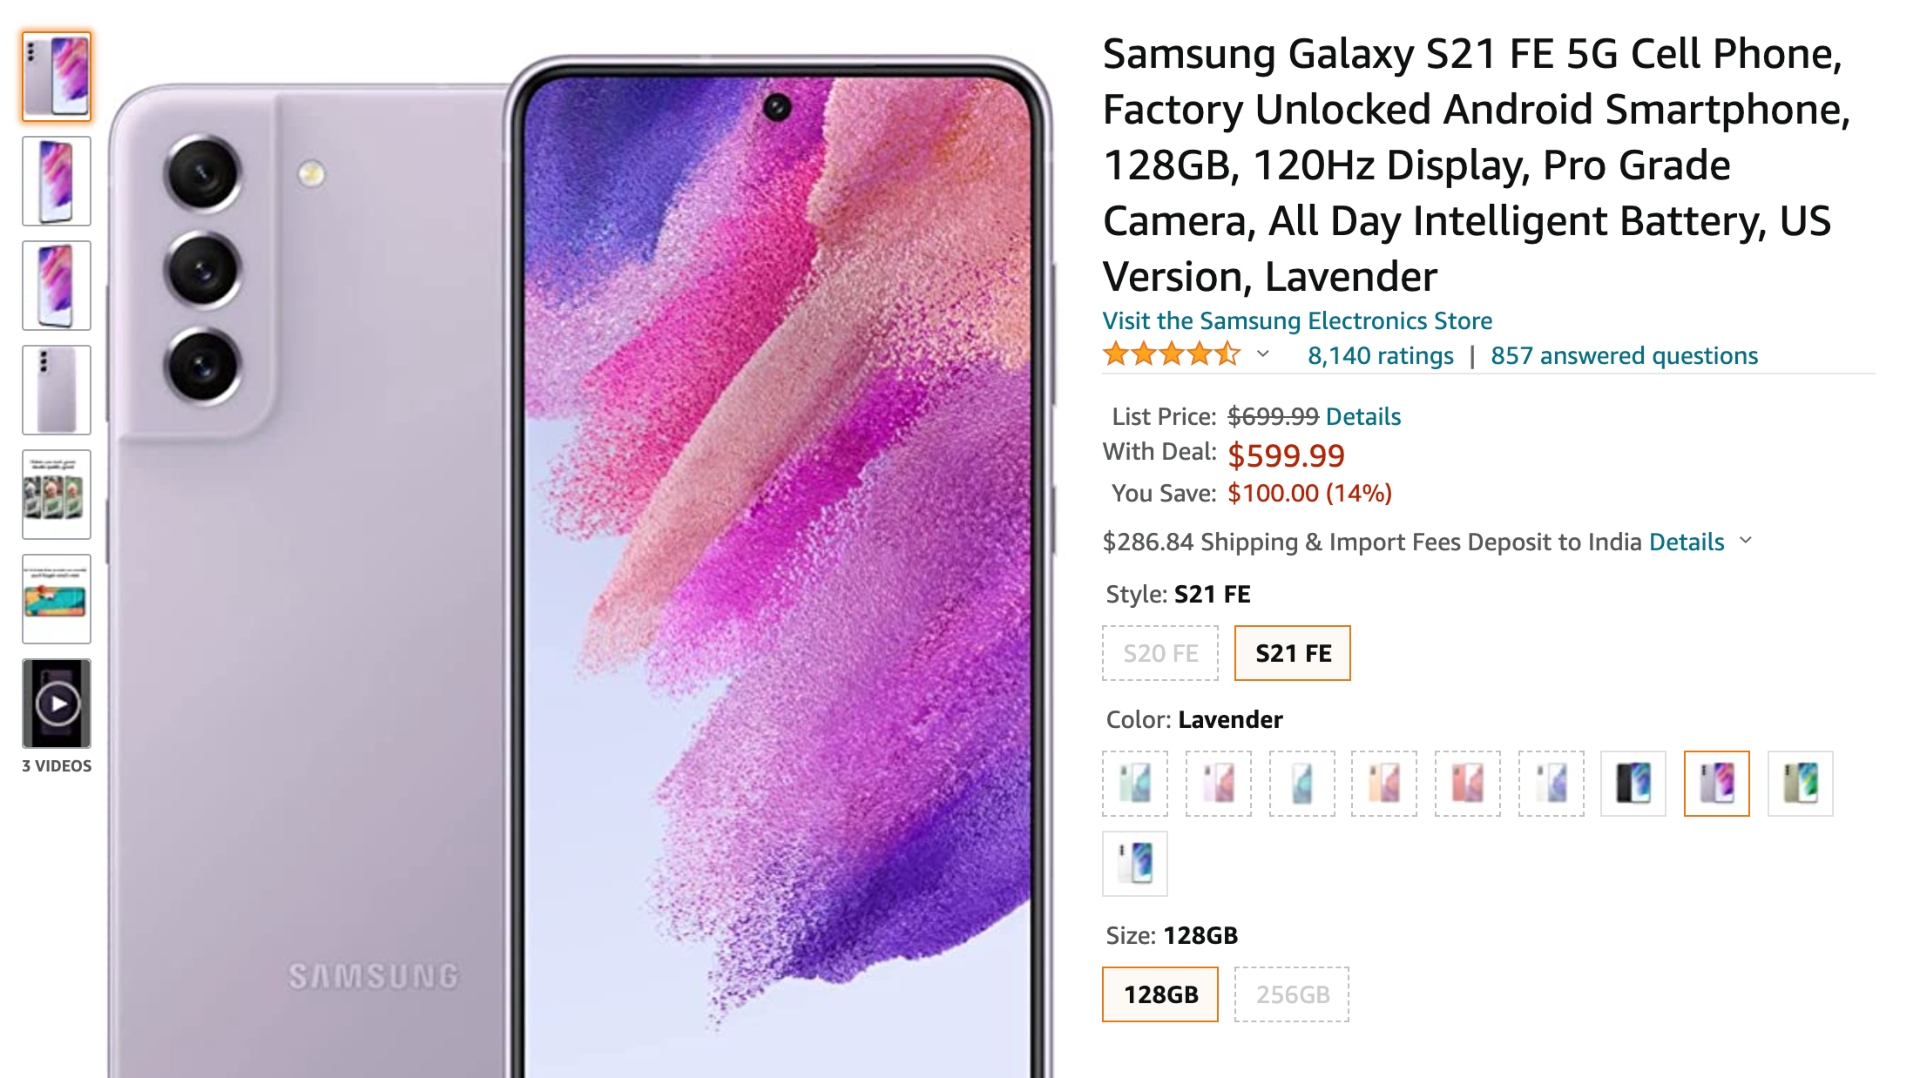 Samsung Galaxy S21 FE Amazon Deal